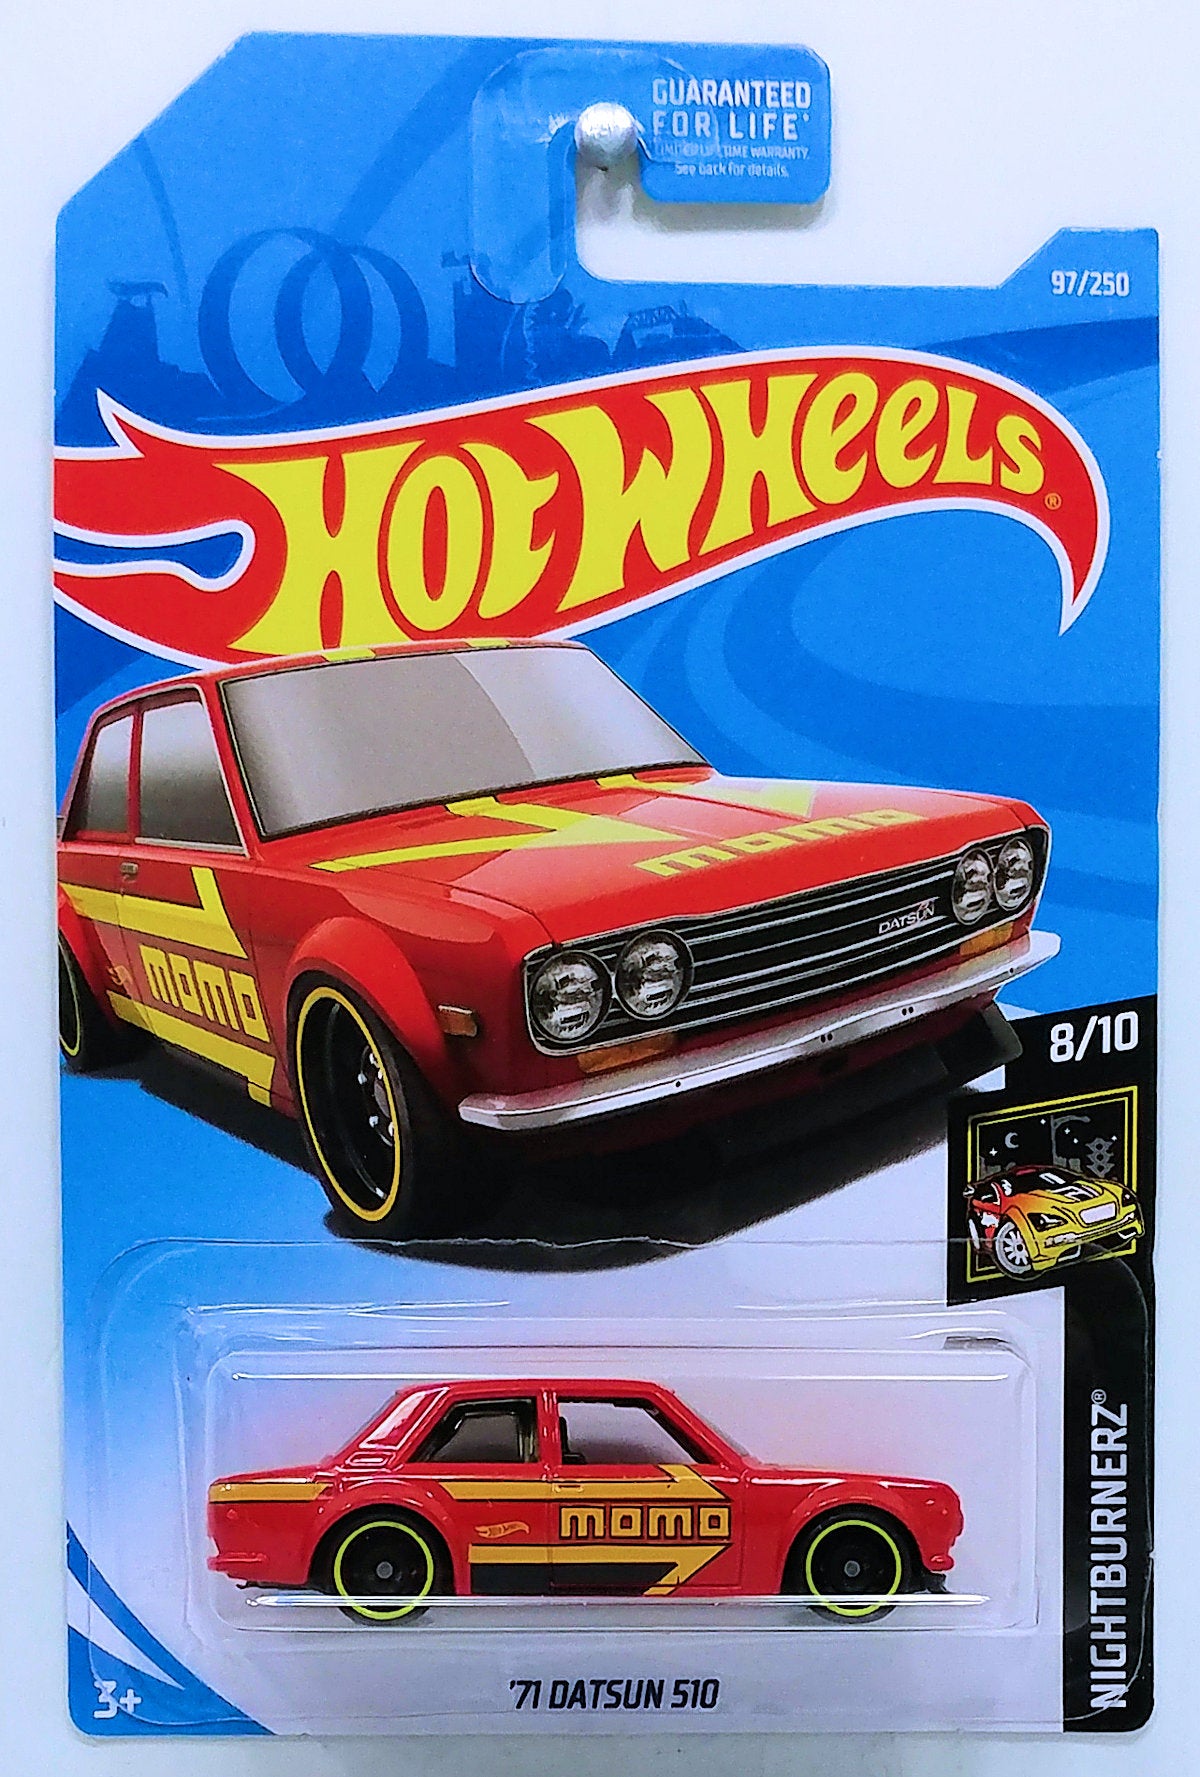 Hot Wheels 2019 - Collector # 097/250 - Nightburnerz 8/10 - '71 Datsun 510 - Red / MOMO - USA